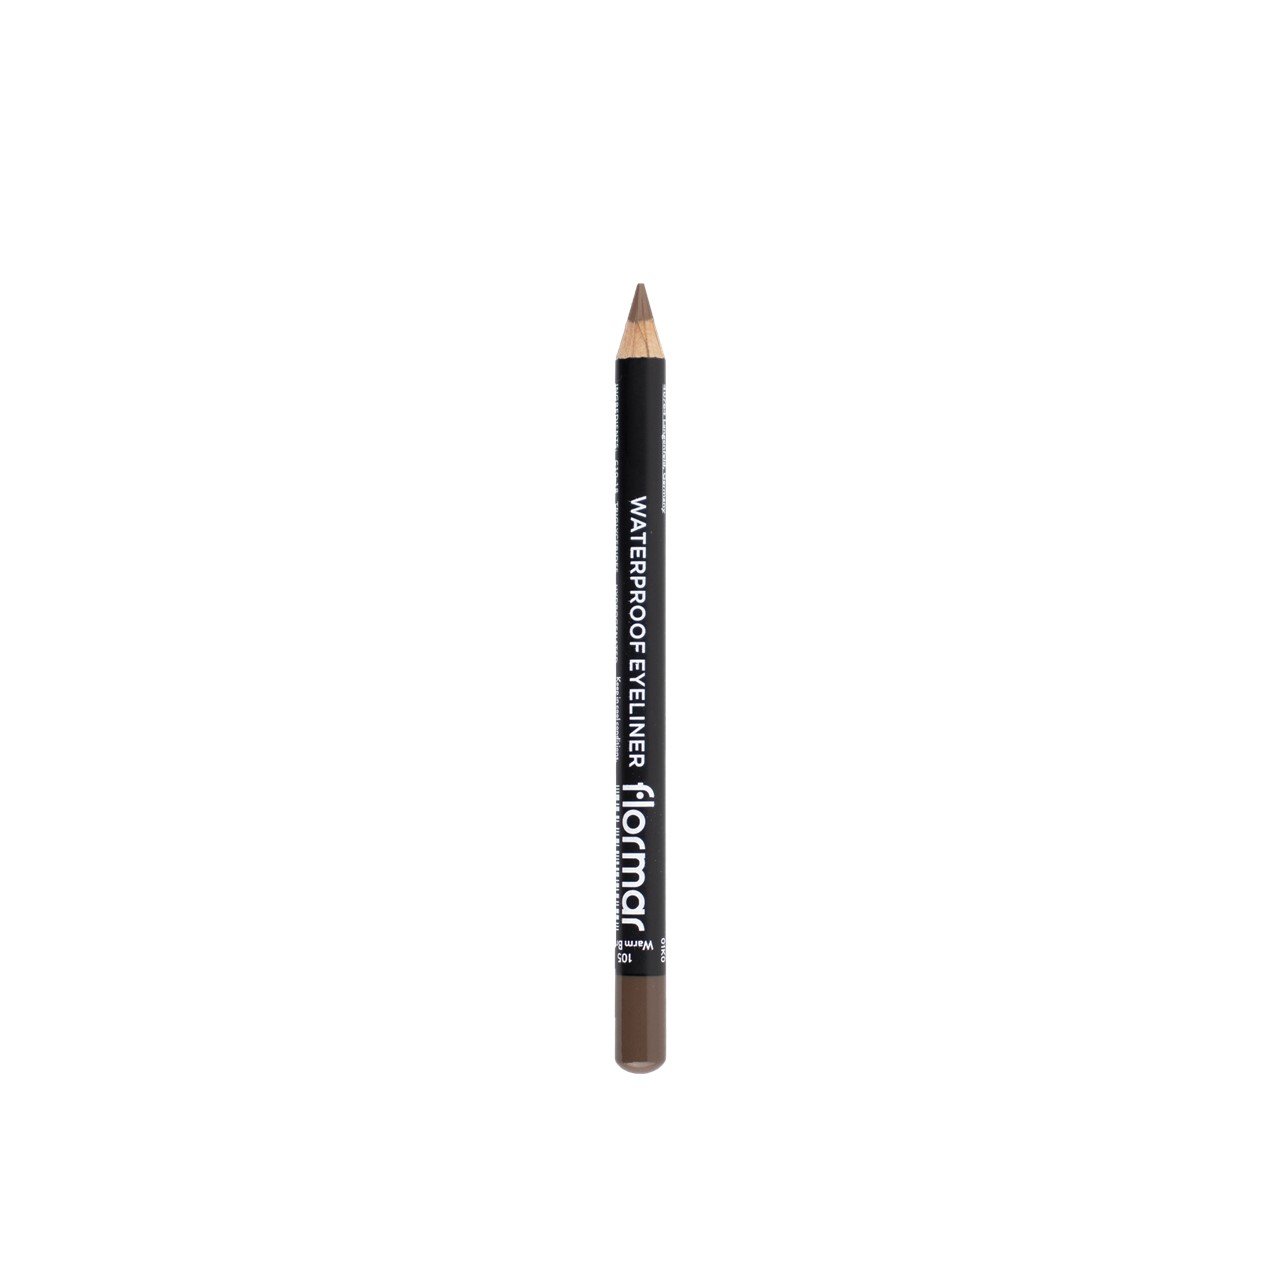 Brown Eye Liner Flormar. TF карандаш для глаз Triumph of Color/Eyeliner, тон 103 "warm Brown/ темный коричневый".